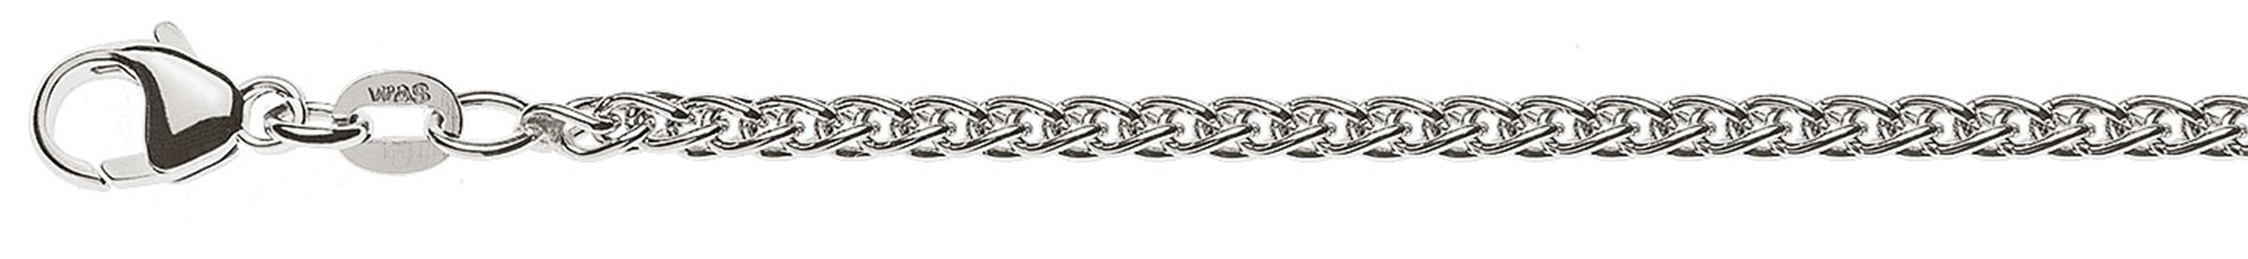 AURONOS Prestige Collier or blanc 18K chaîne câble 60cm 2.5mm